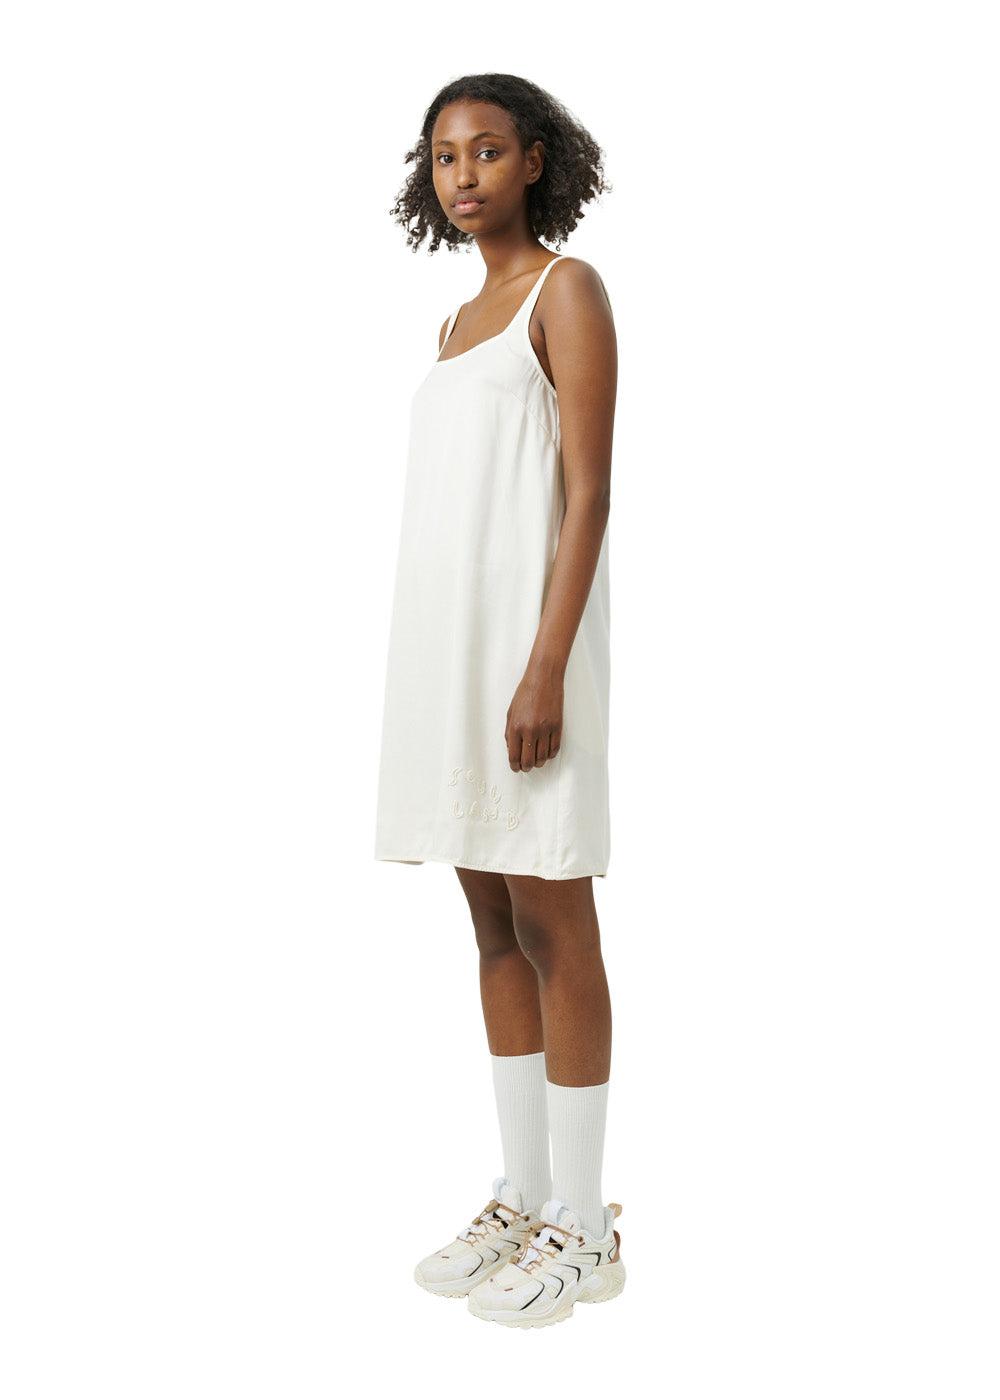 Soullands Capri dress - Off White. Køb kjoler her.